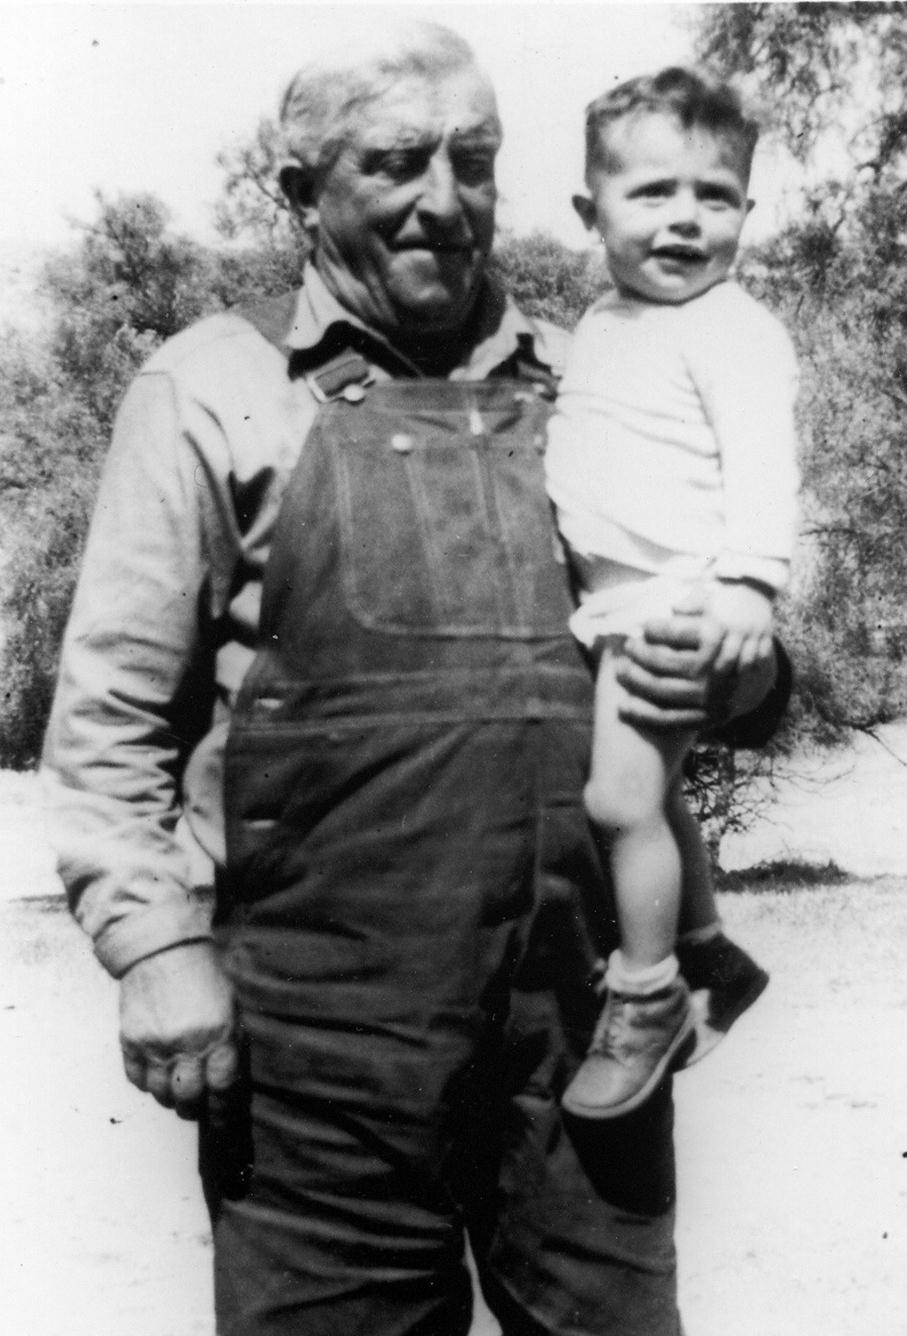 Nogues, Pierre with grandson Lawrence Rivas photo